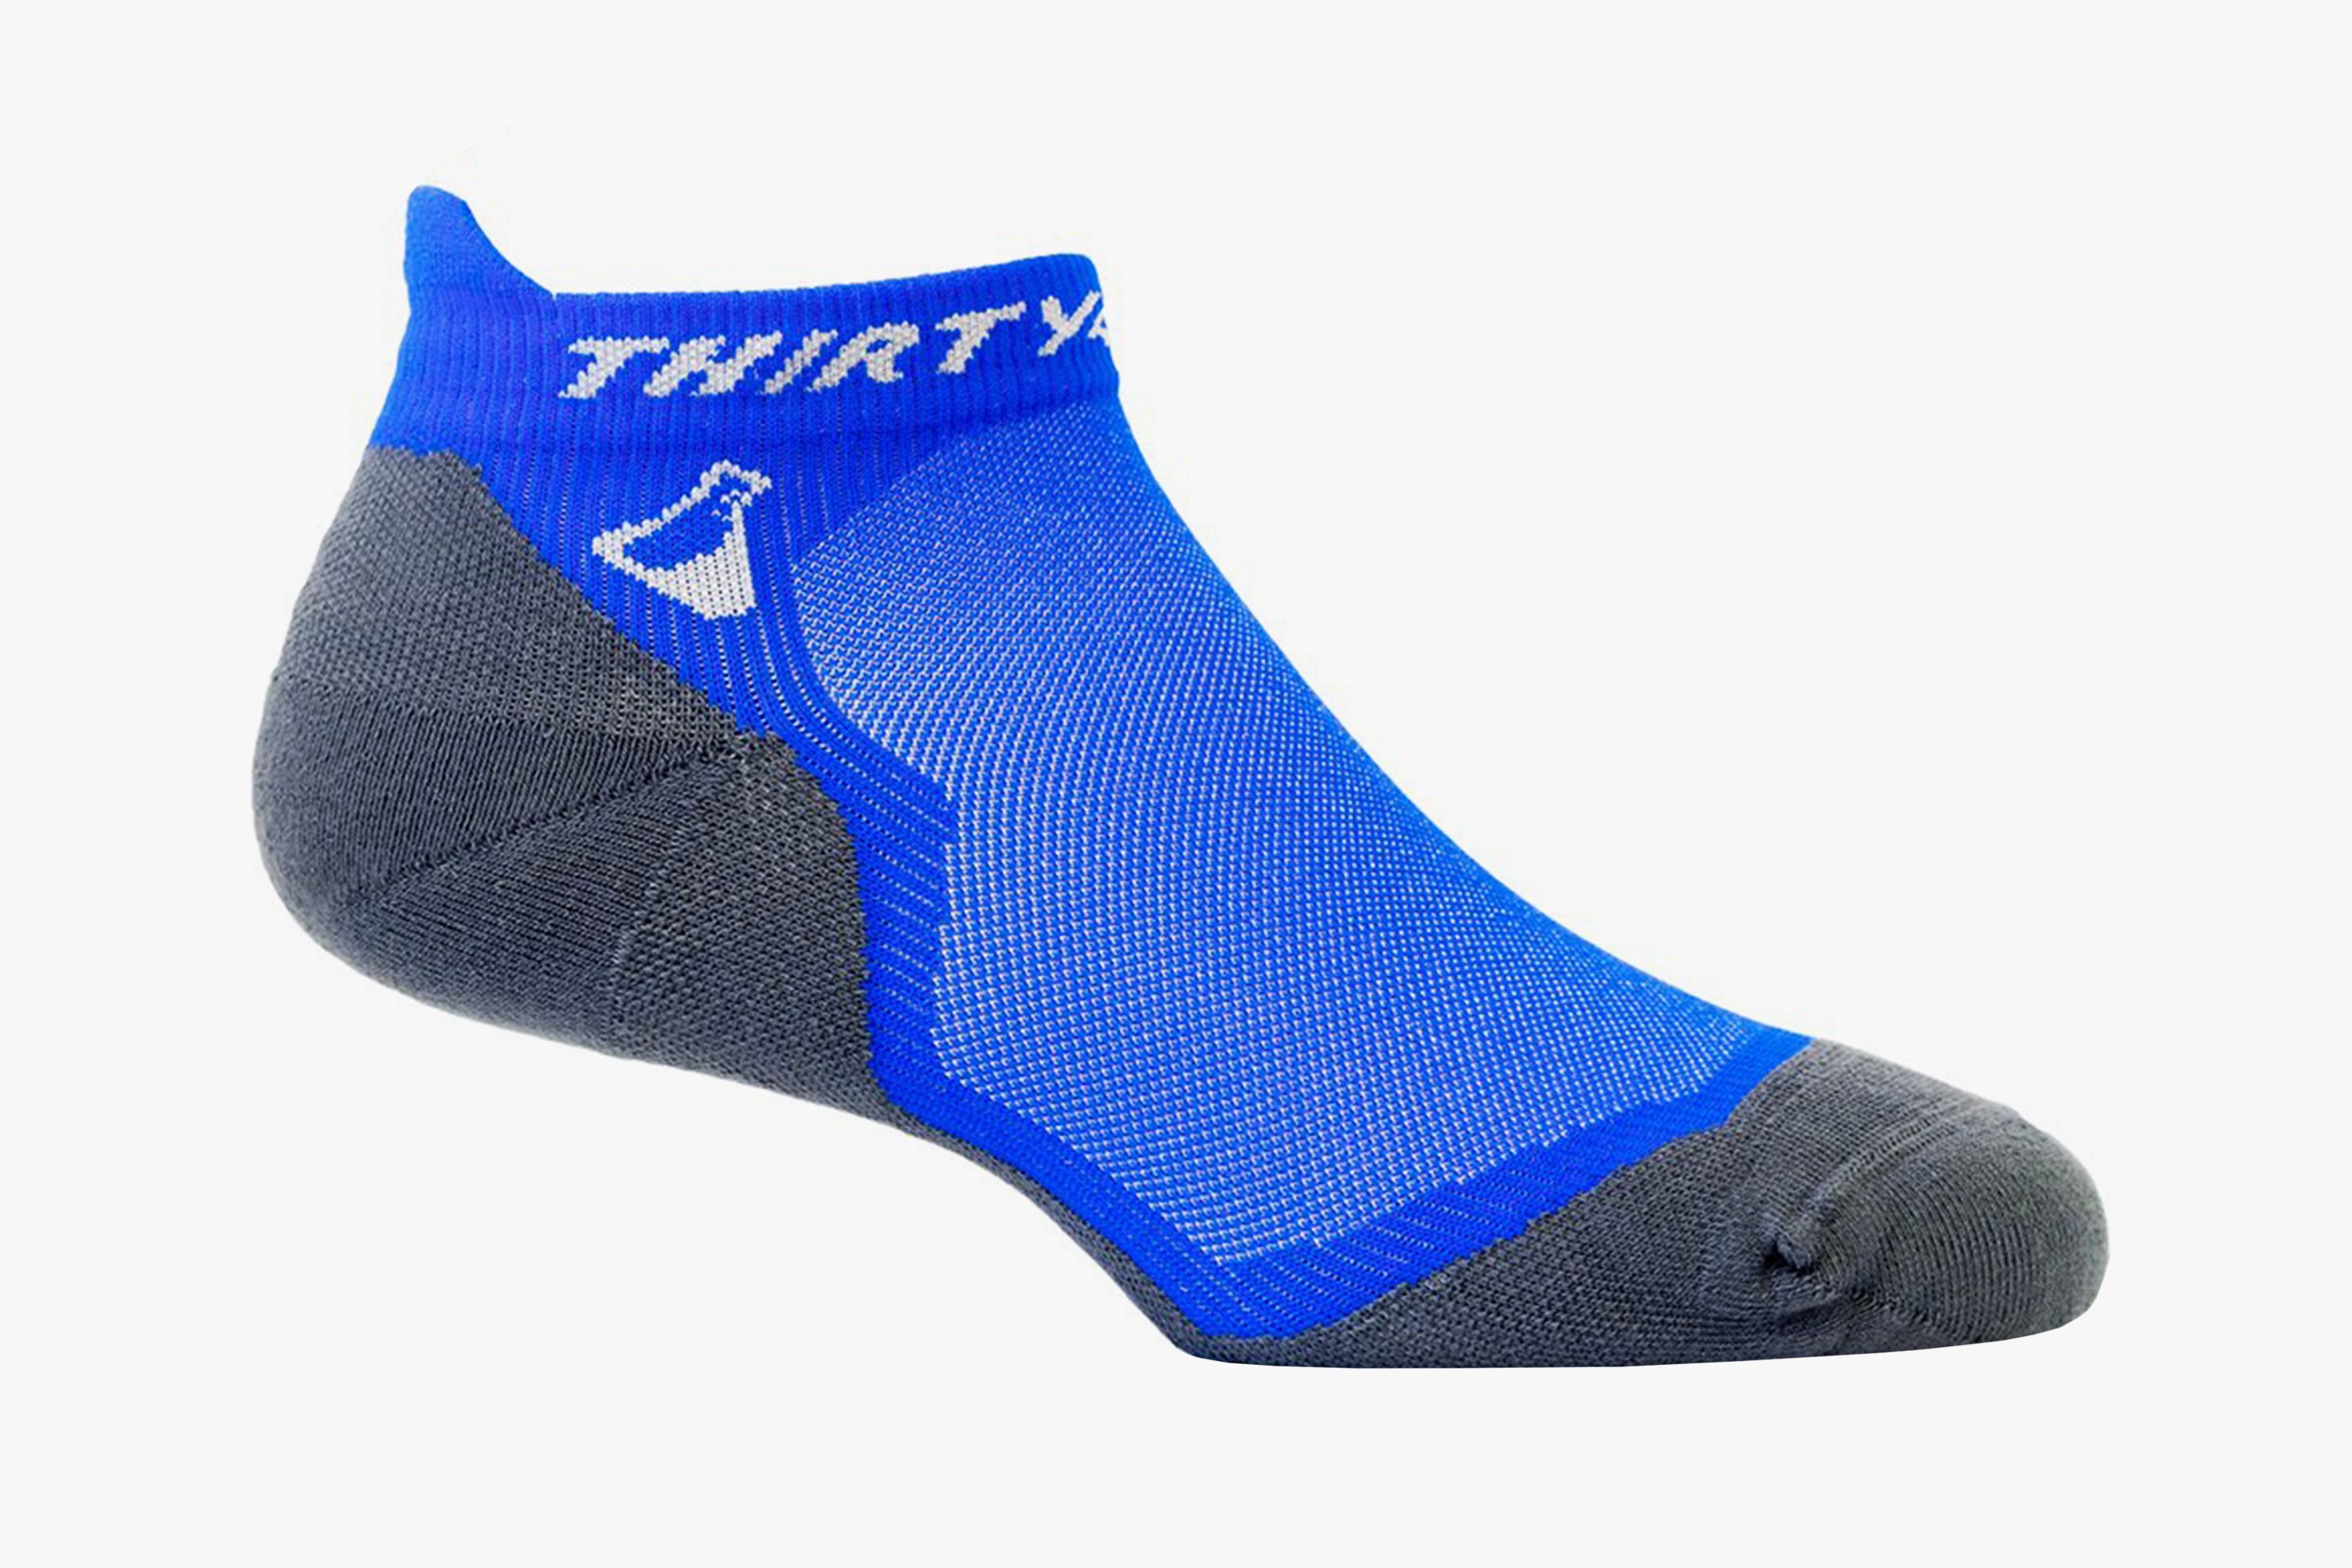 the best athletic socks